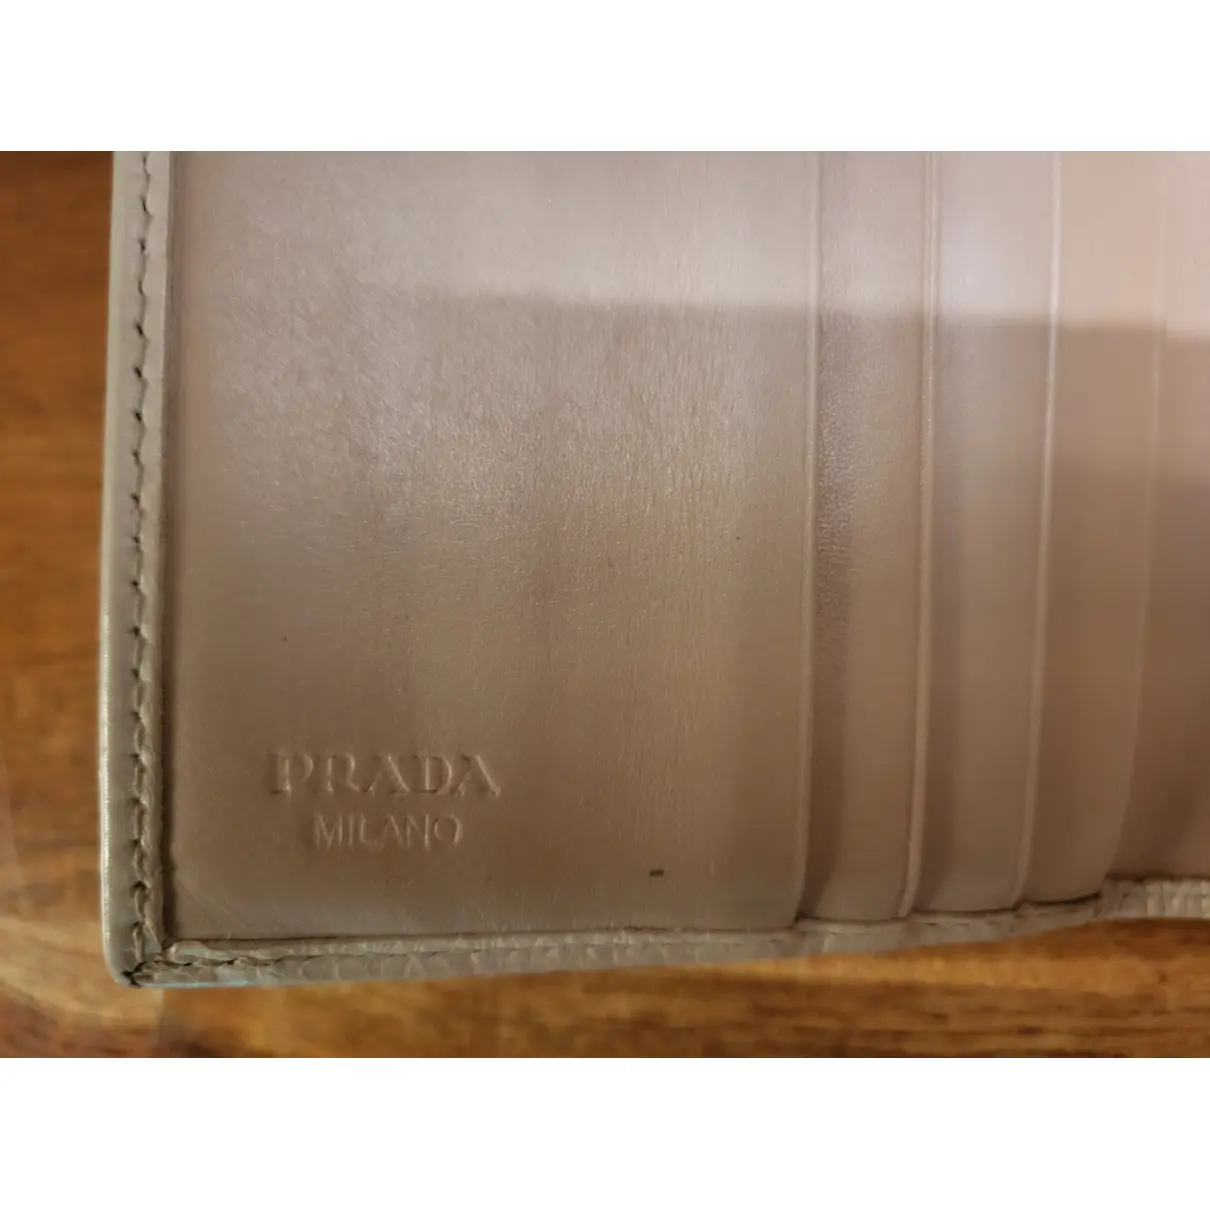 Leather card wallet Prada - Vintage